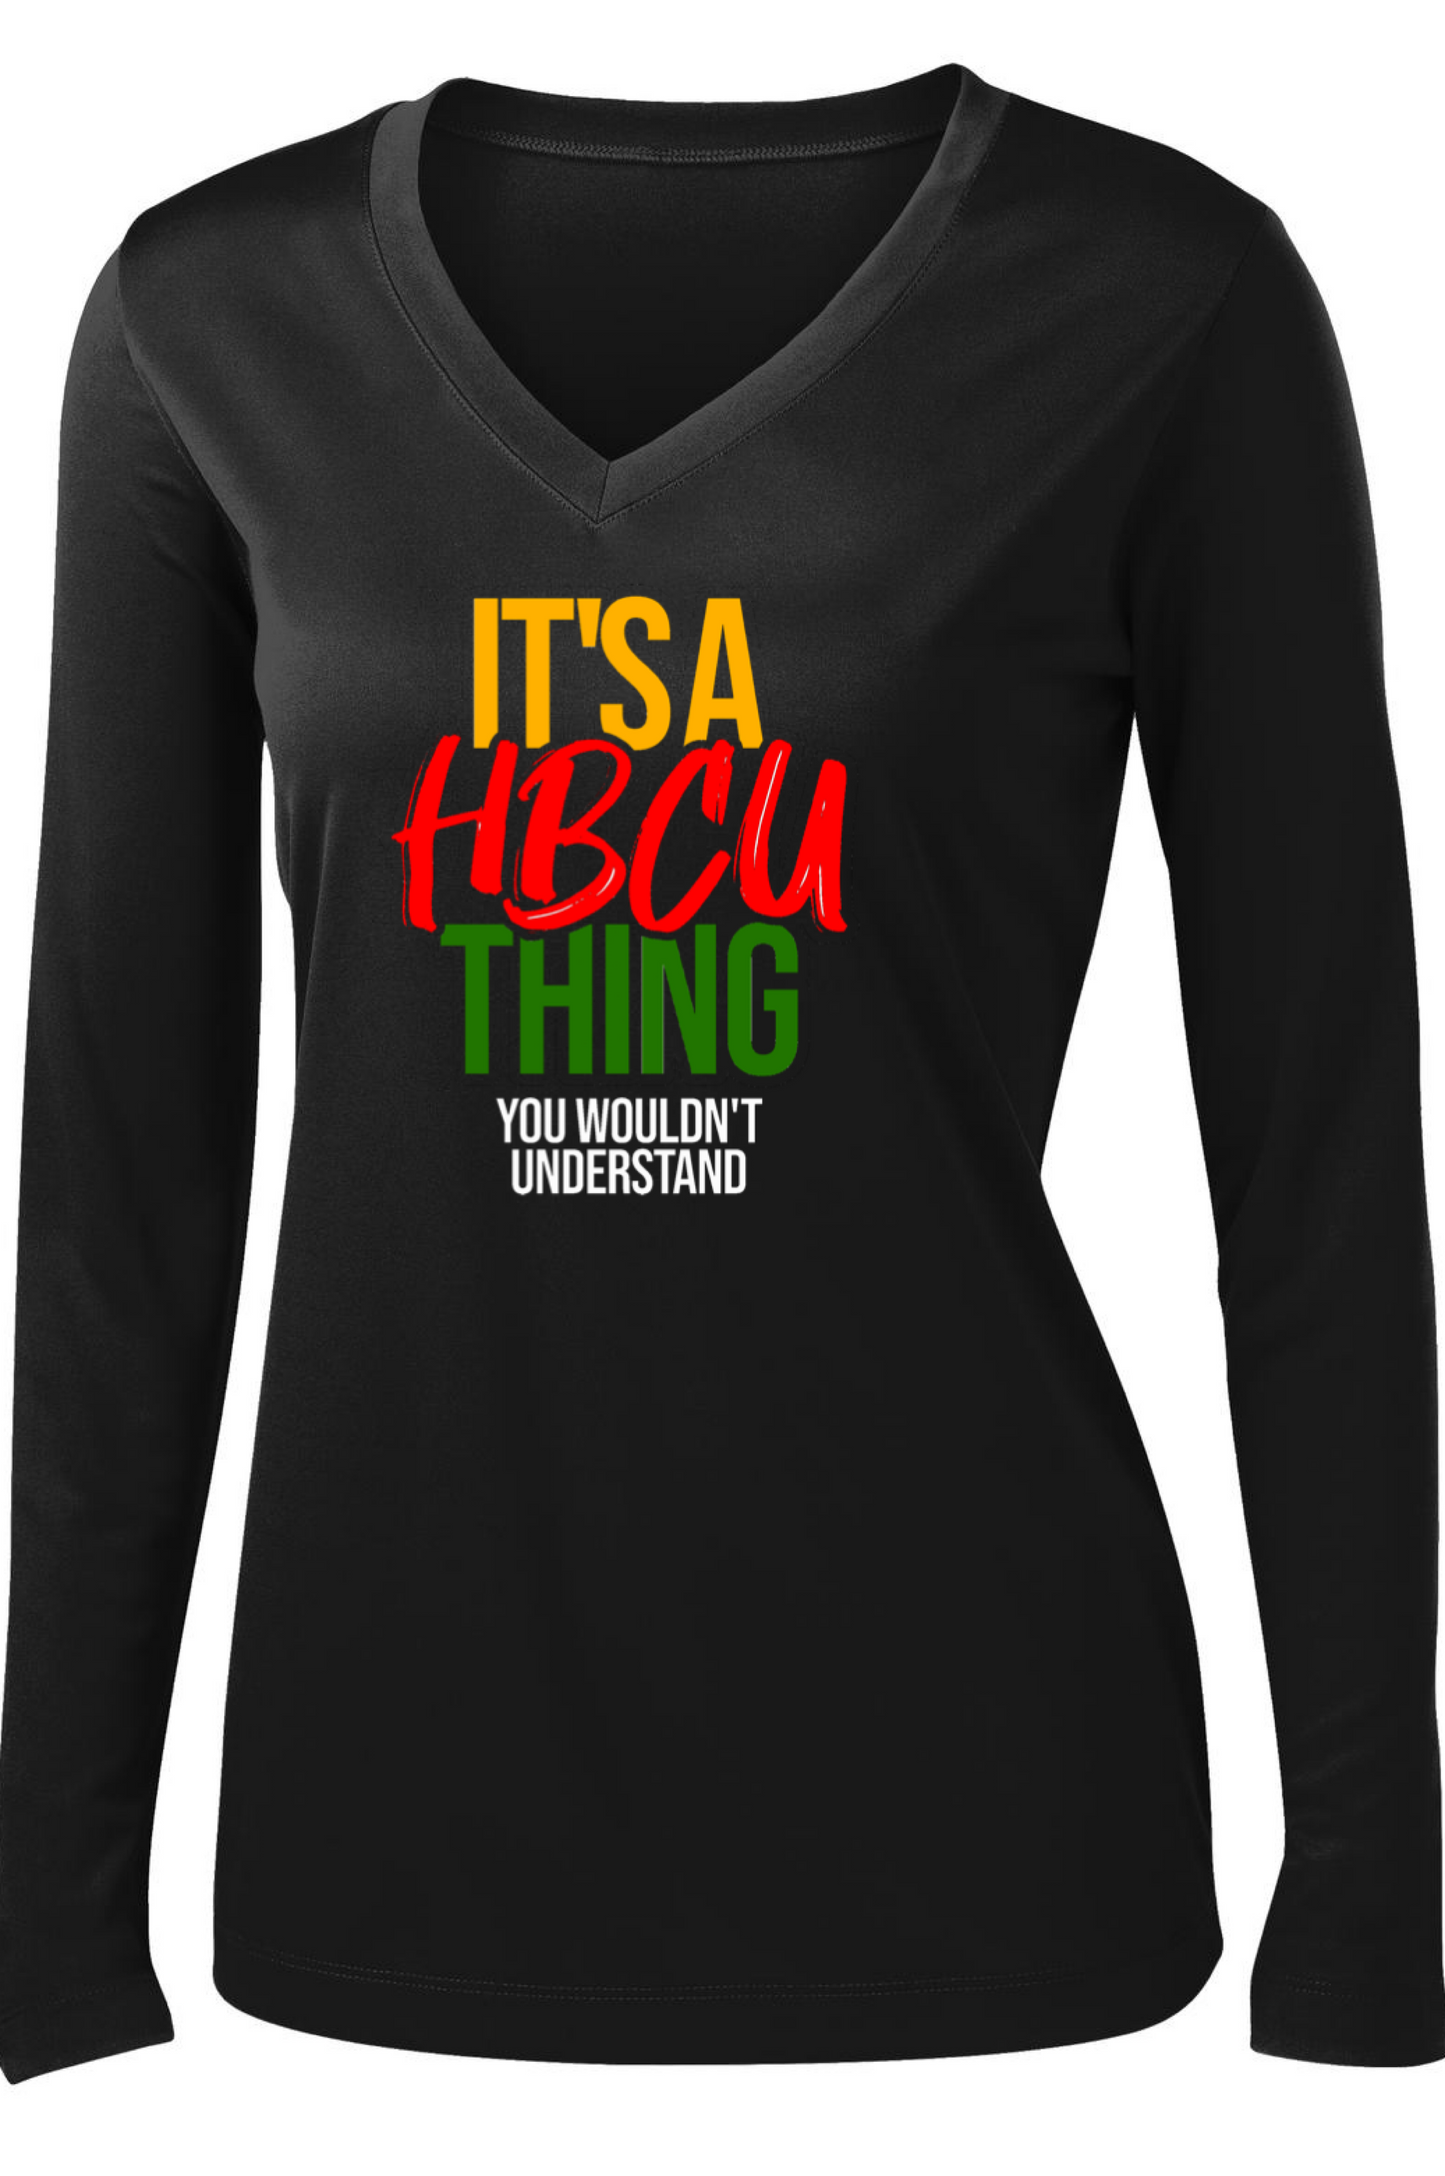 It's A HBCU Thing Long Sleeve T-shirt